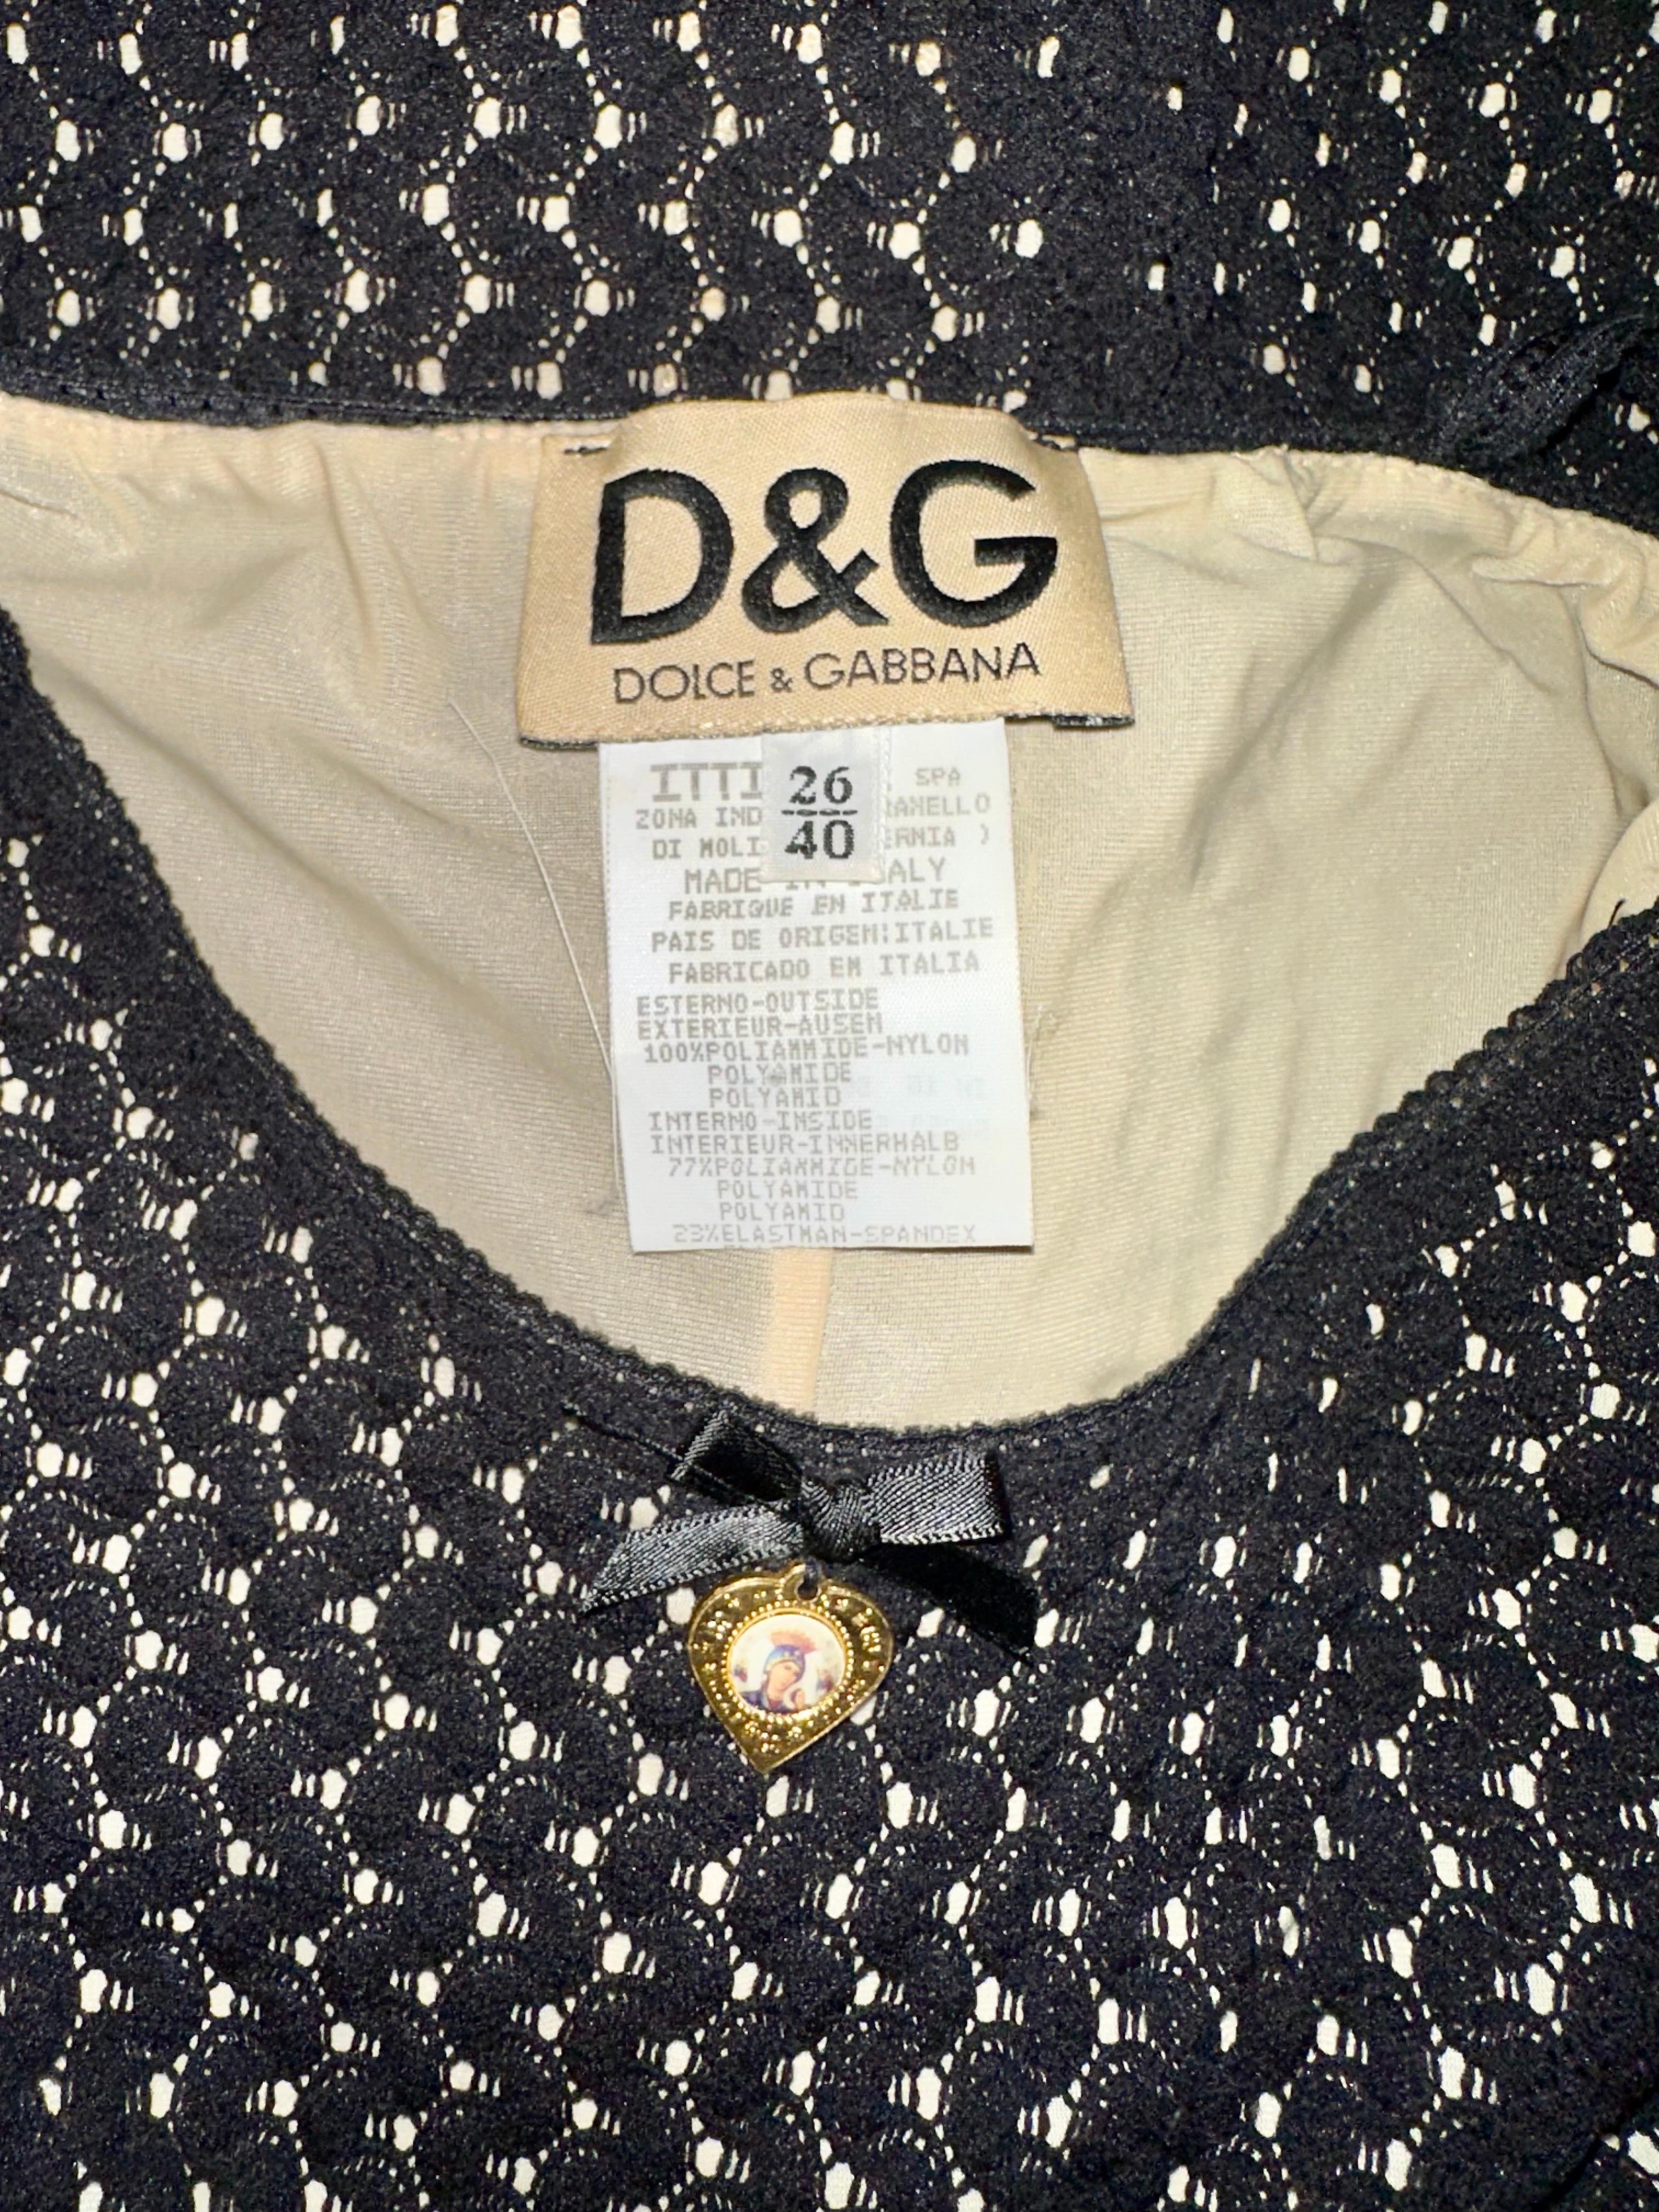 D&G by Dolce & Gabbana 1990's Sheer Knit Fishnet Virgin Mary Charm Black Dress For Sale 4